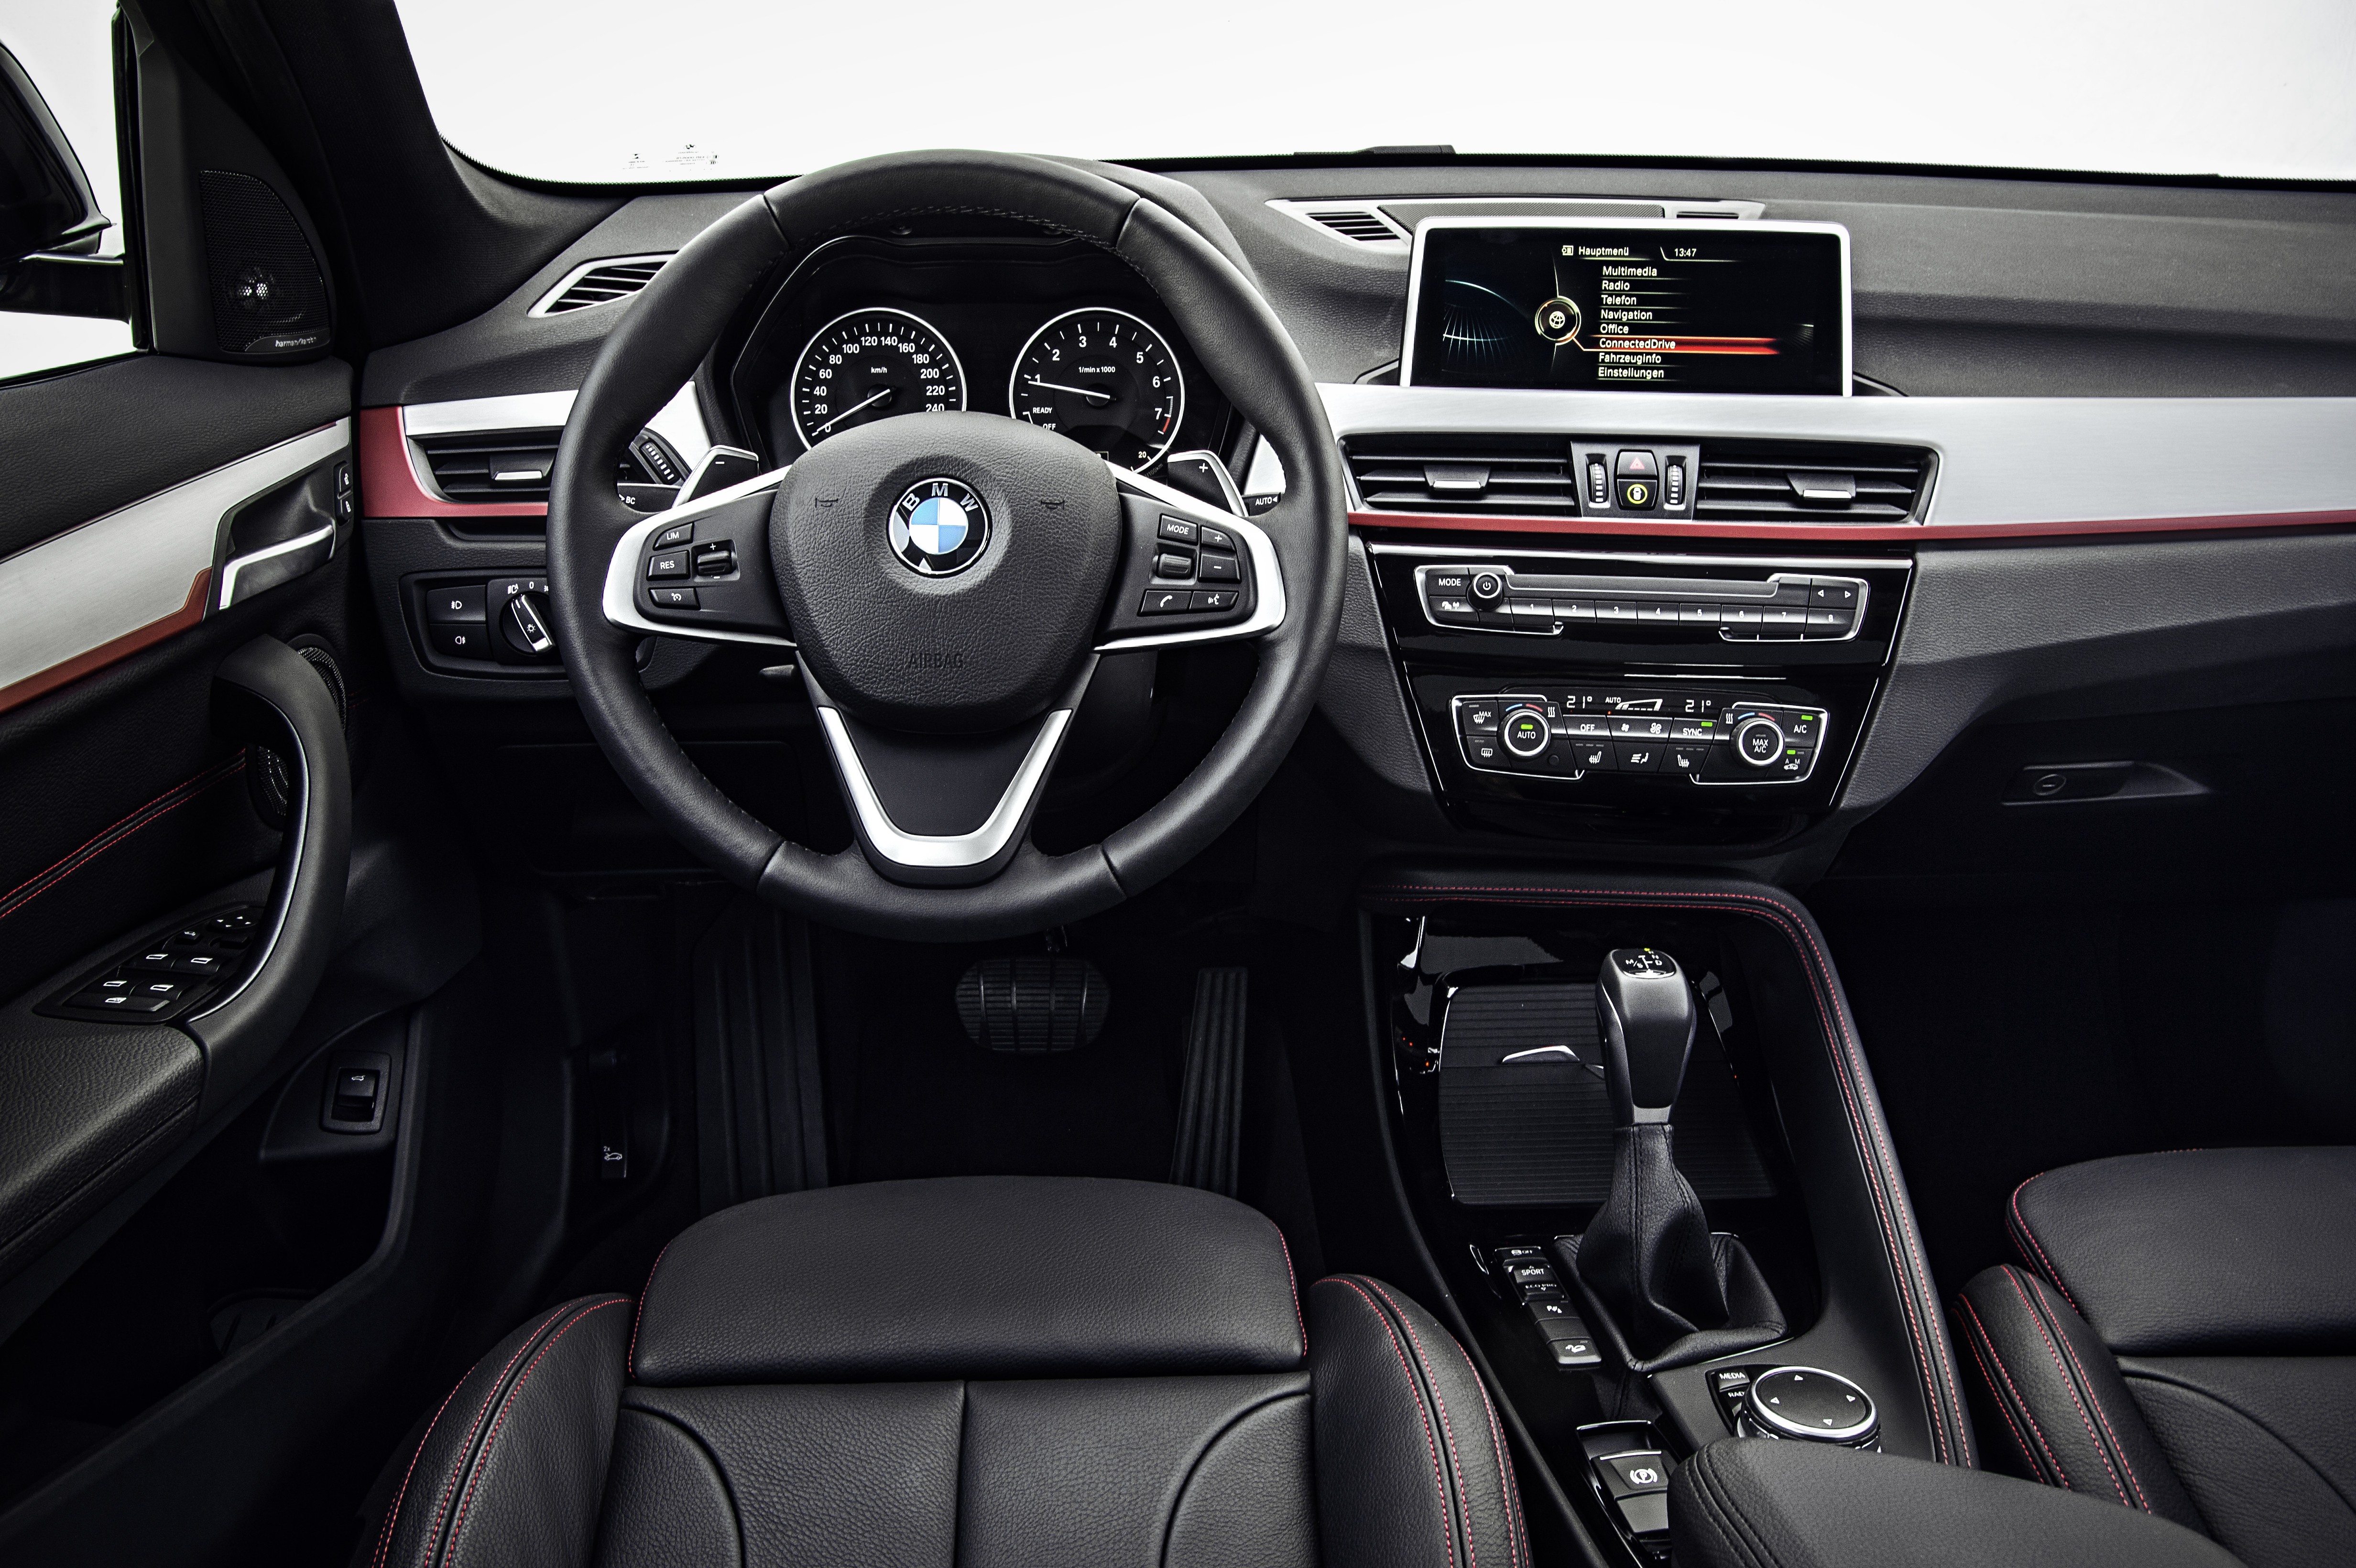 BMW X1 (F48) modern specifications